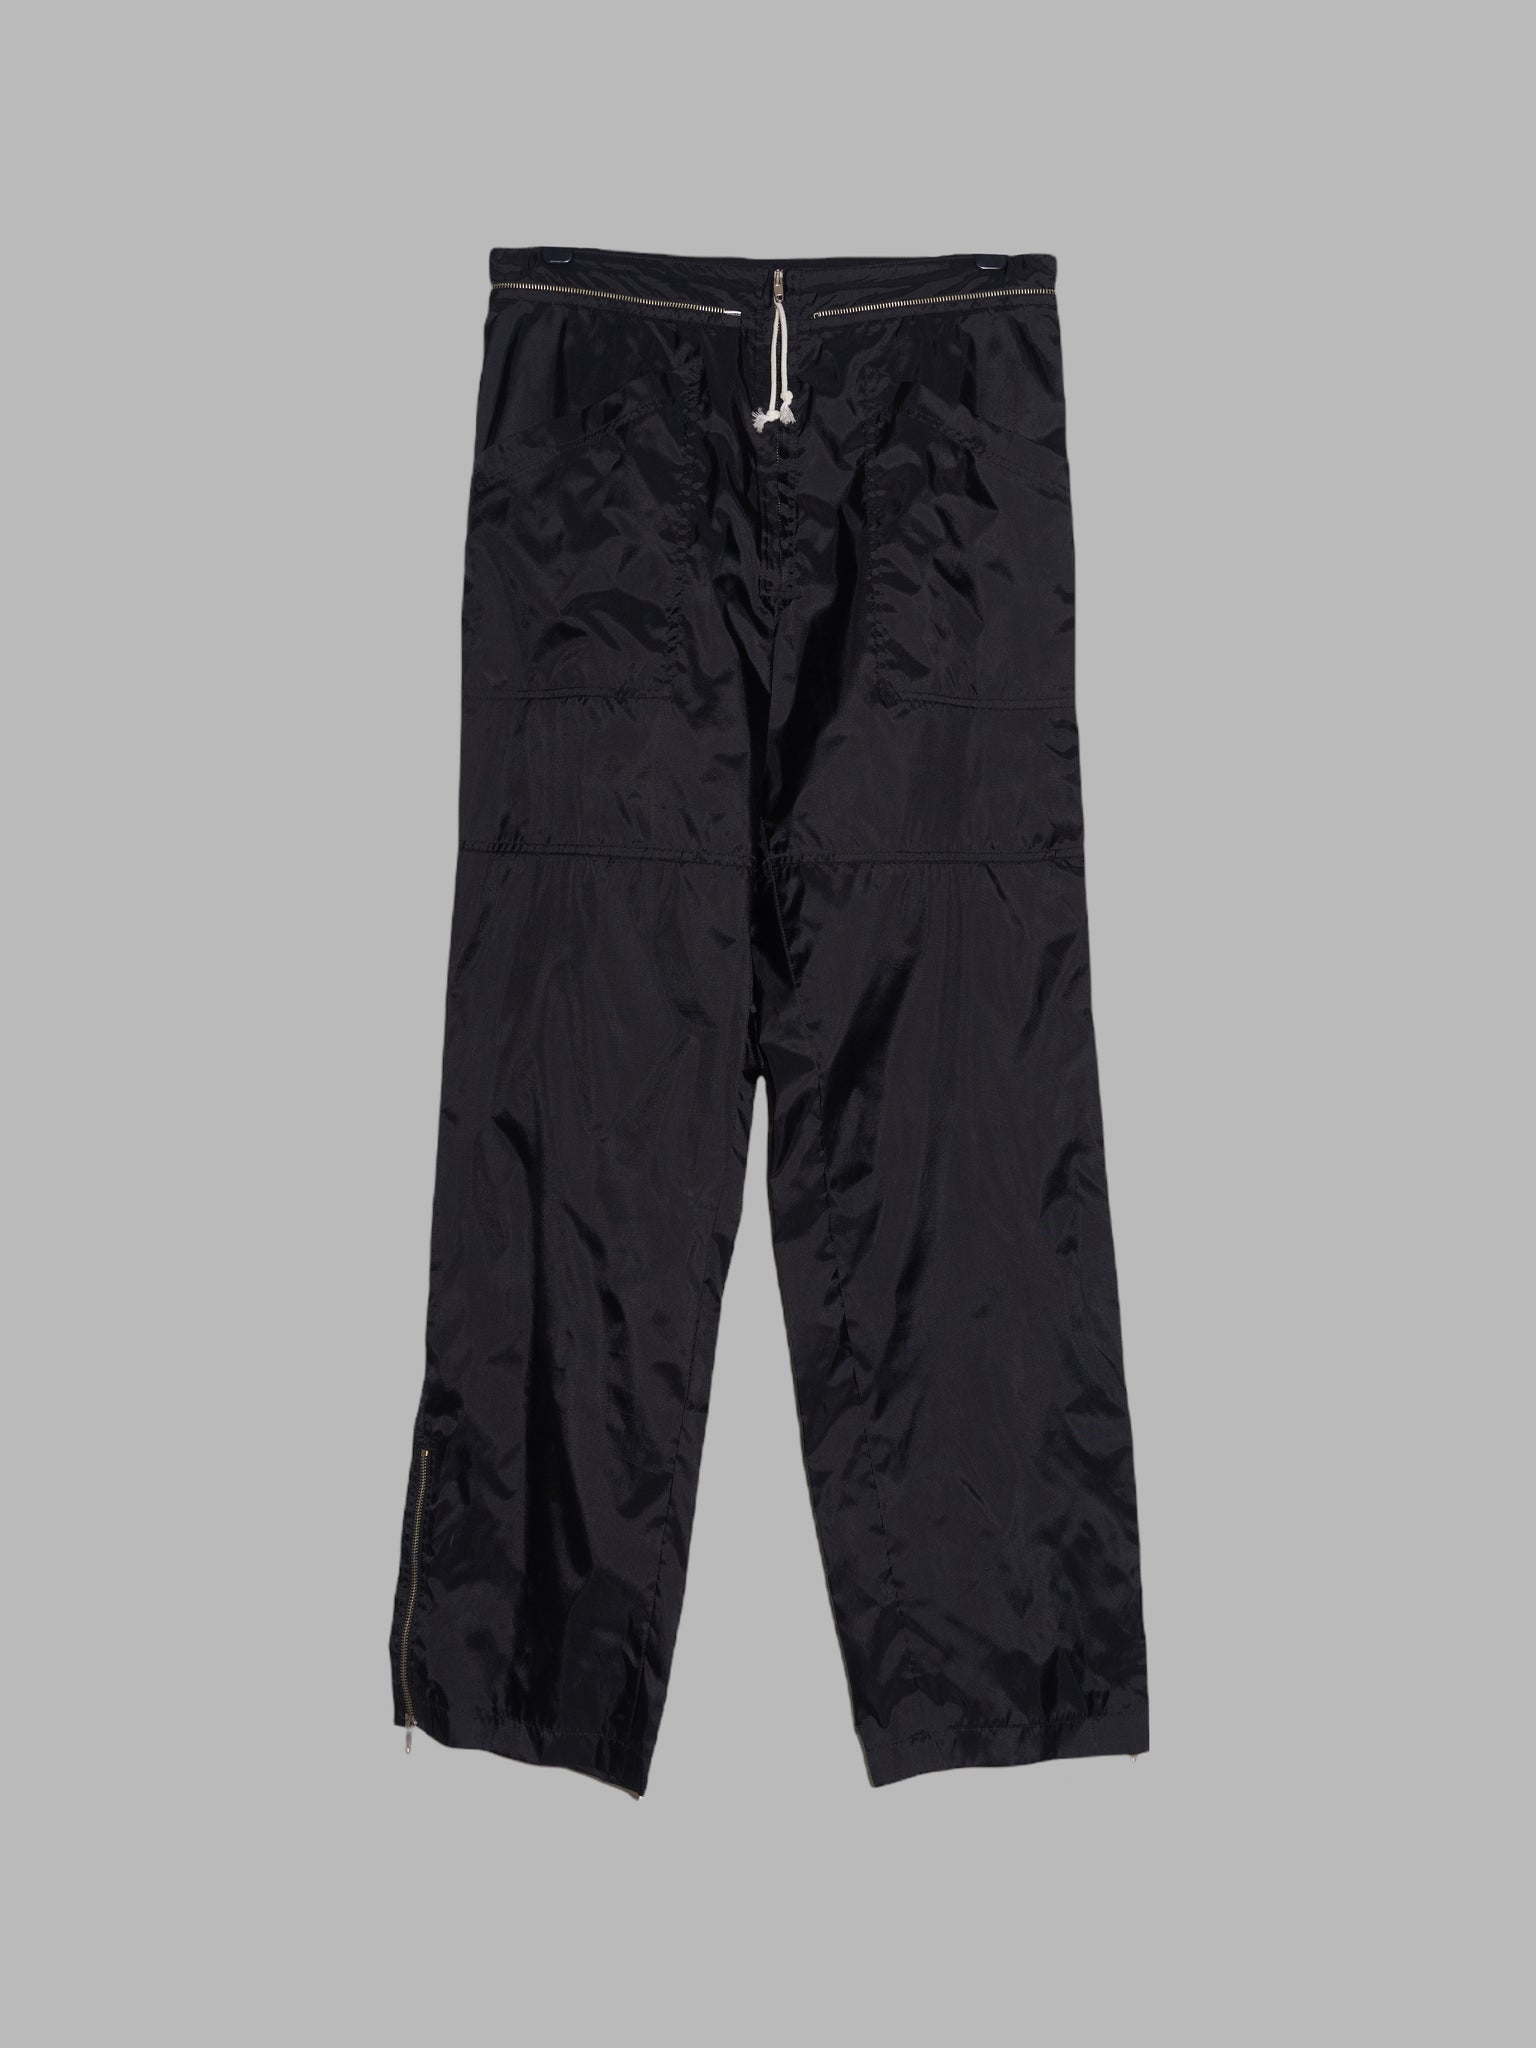 Jean Colonna black nylon wide leg trousers with waist zip detail